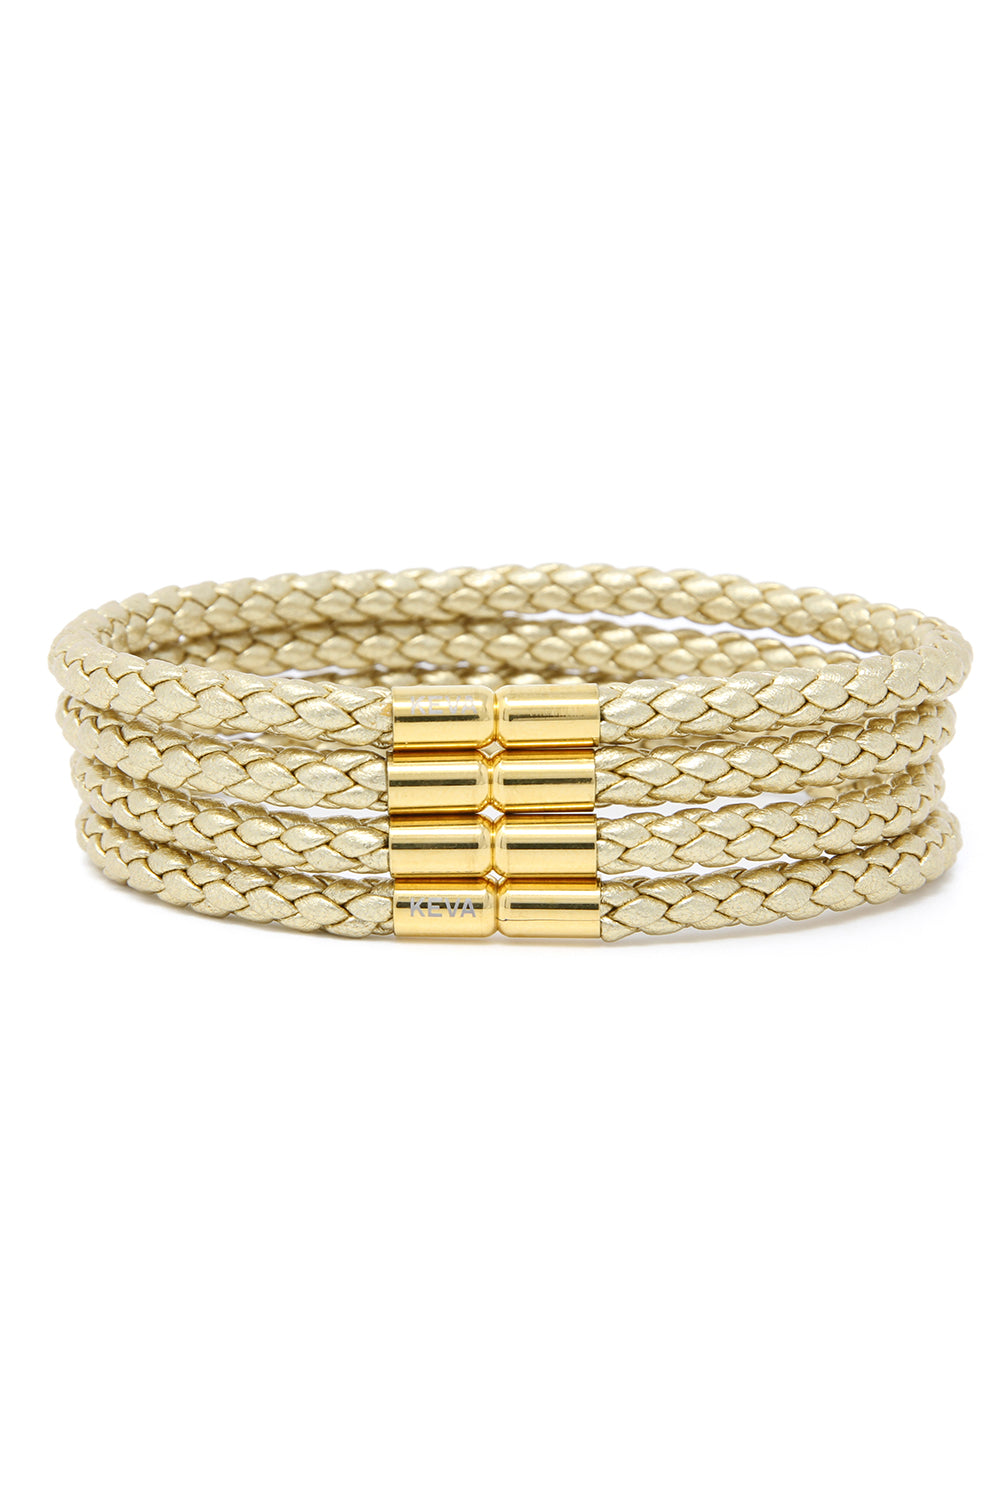 SIDEWALK SALE ITEM - Keva Braided Bracelet - Gold